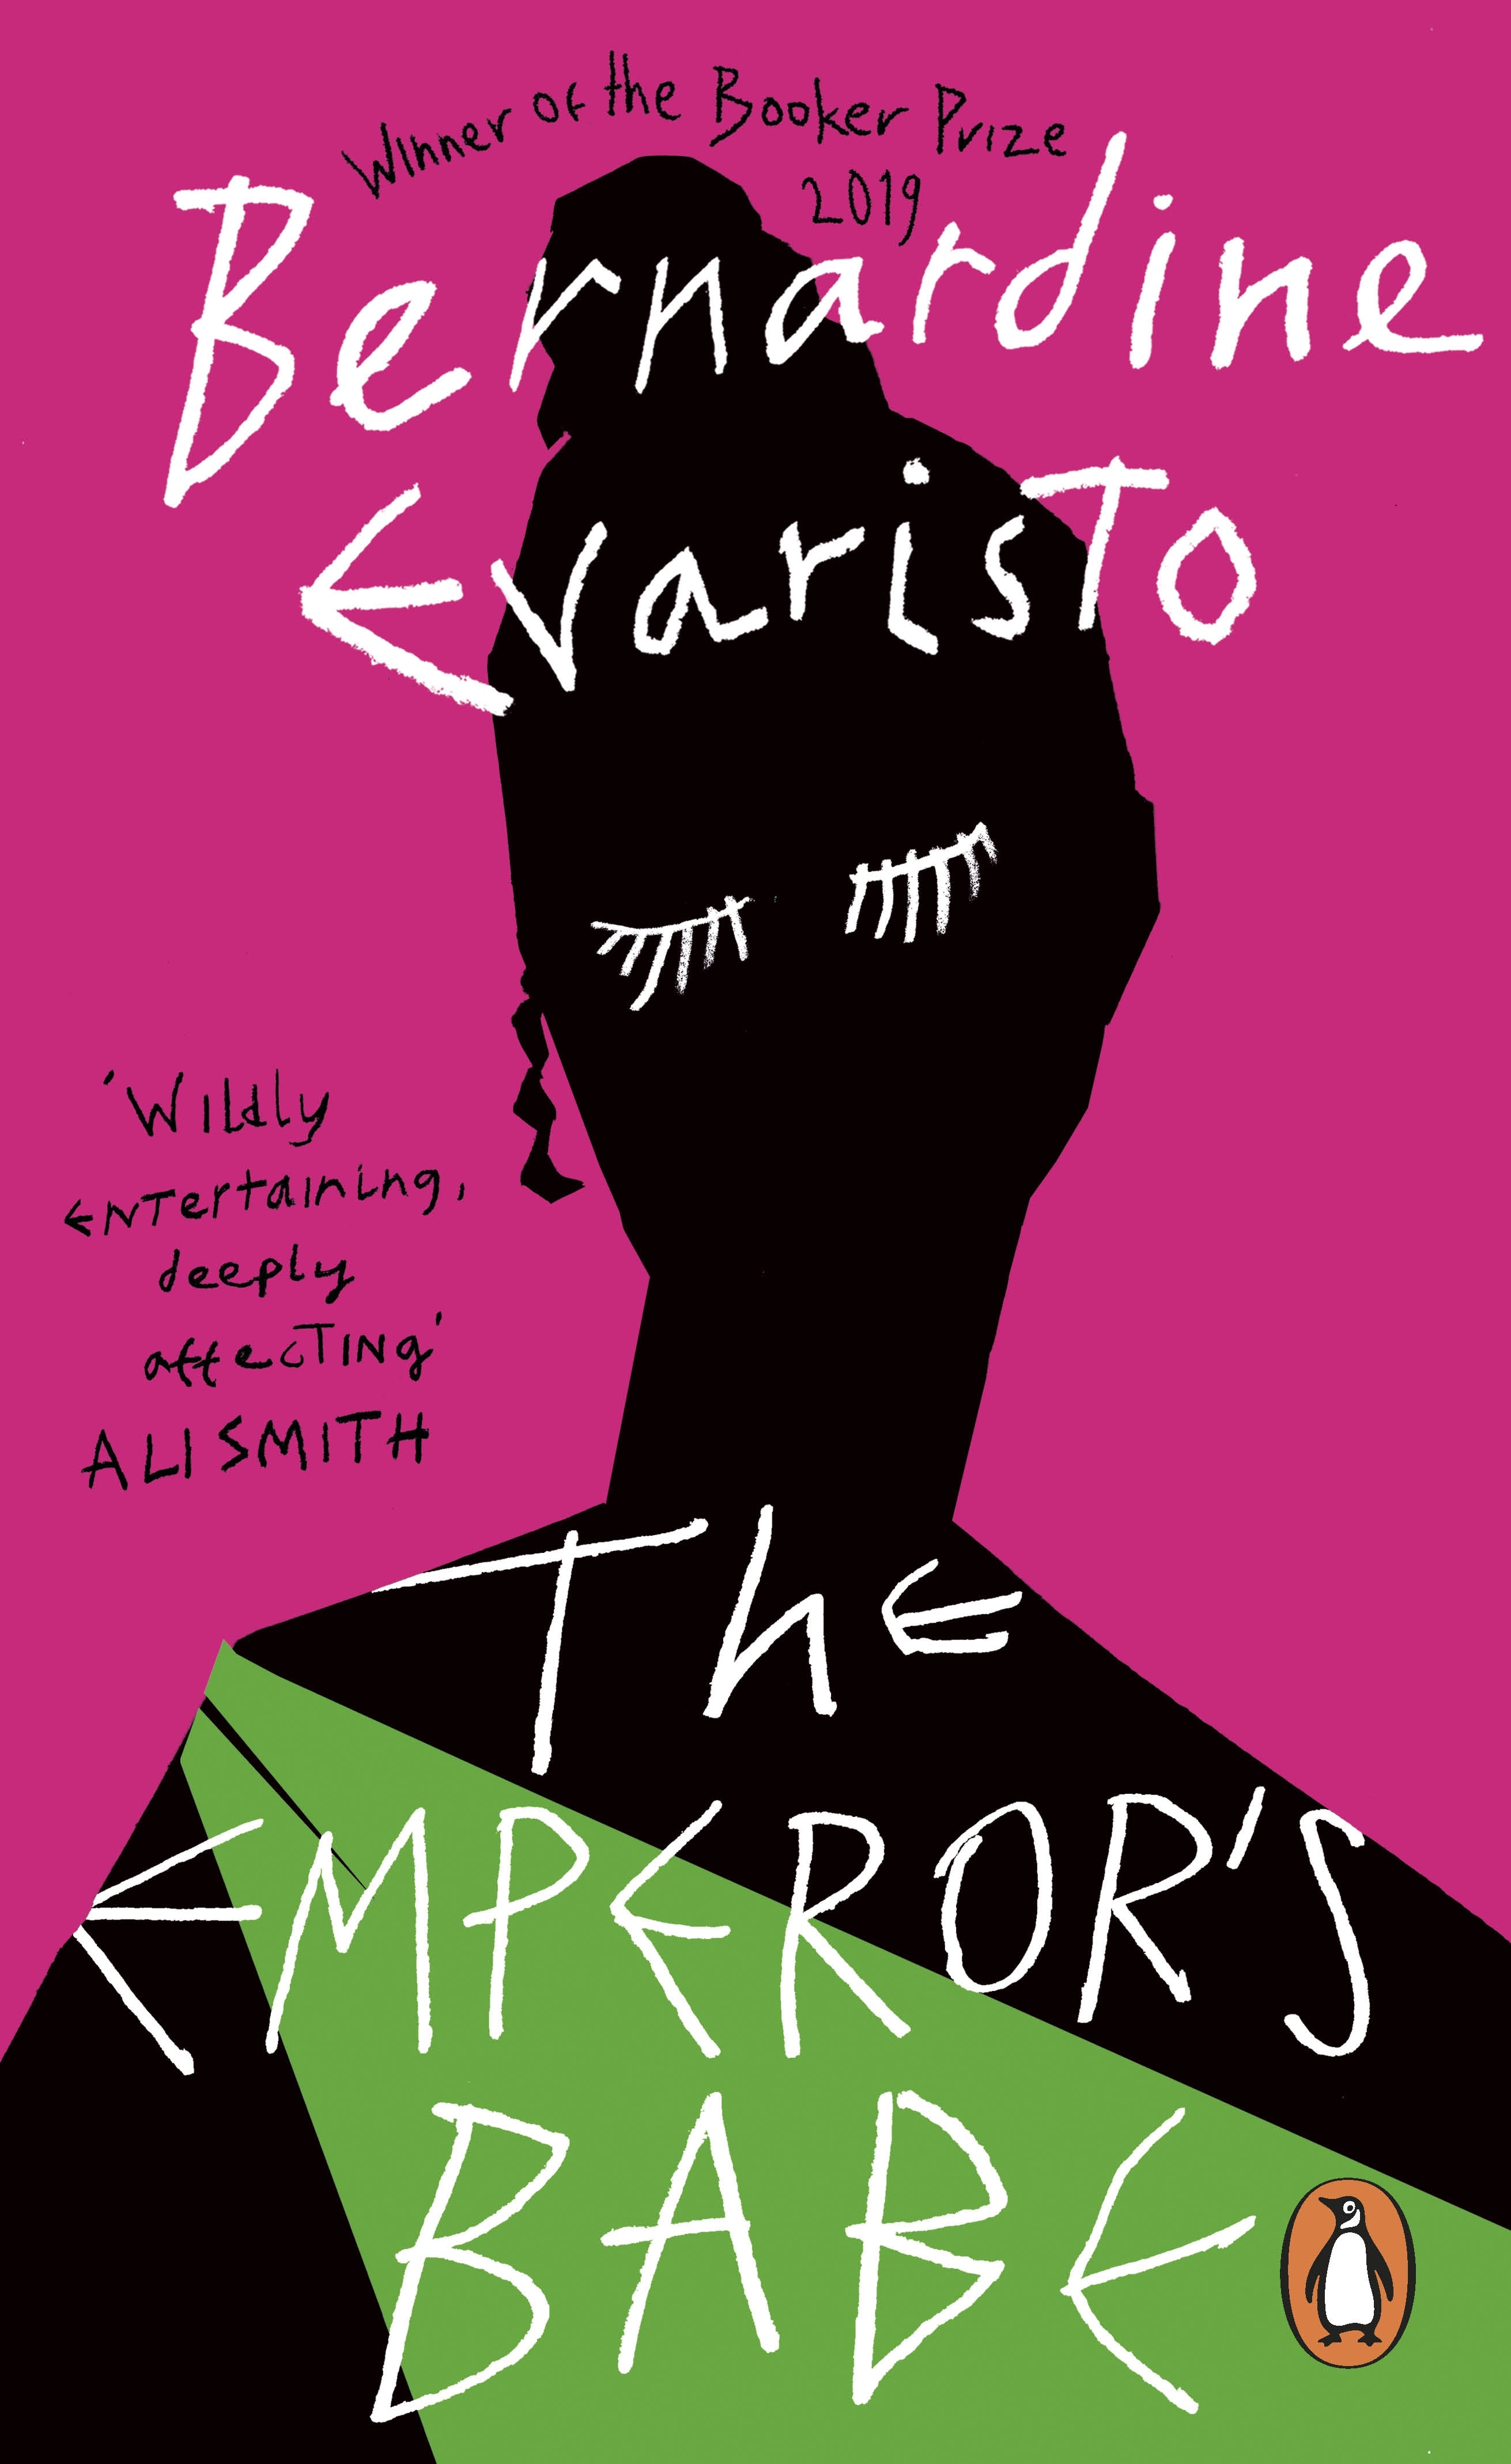 Book “The Emperor's Babe” by Bernardine Evaristo — July 23, 2020